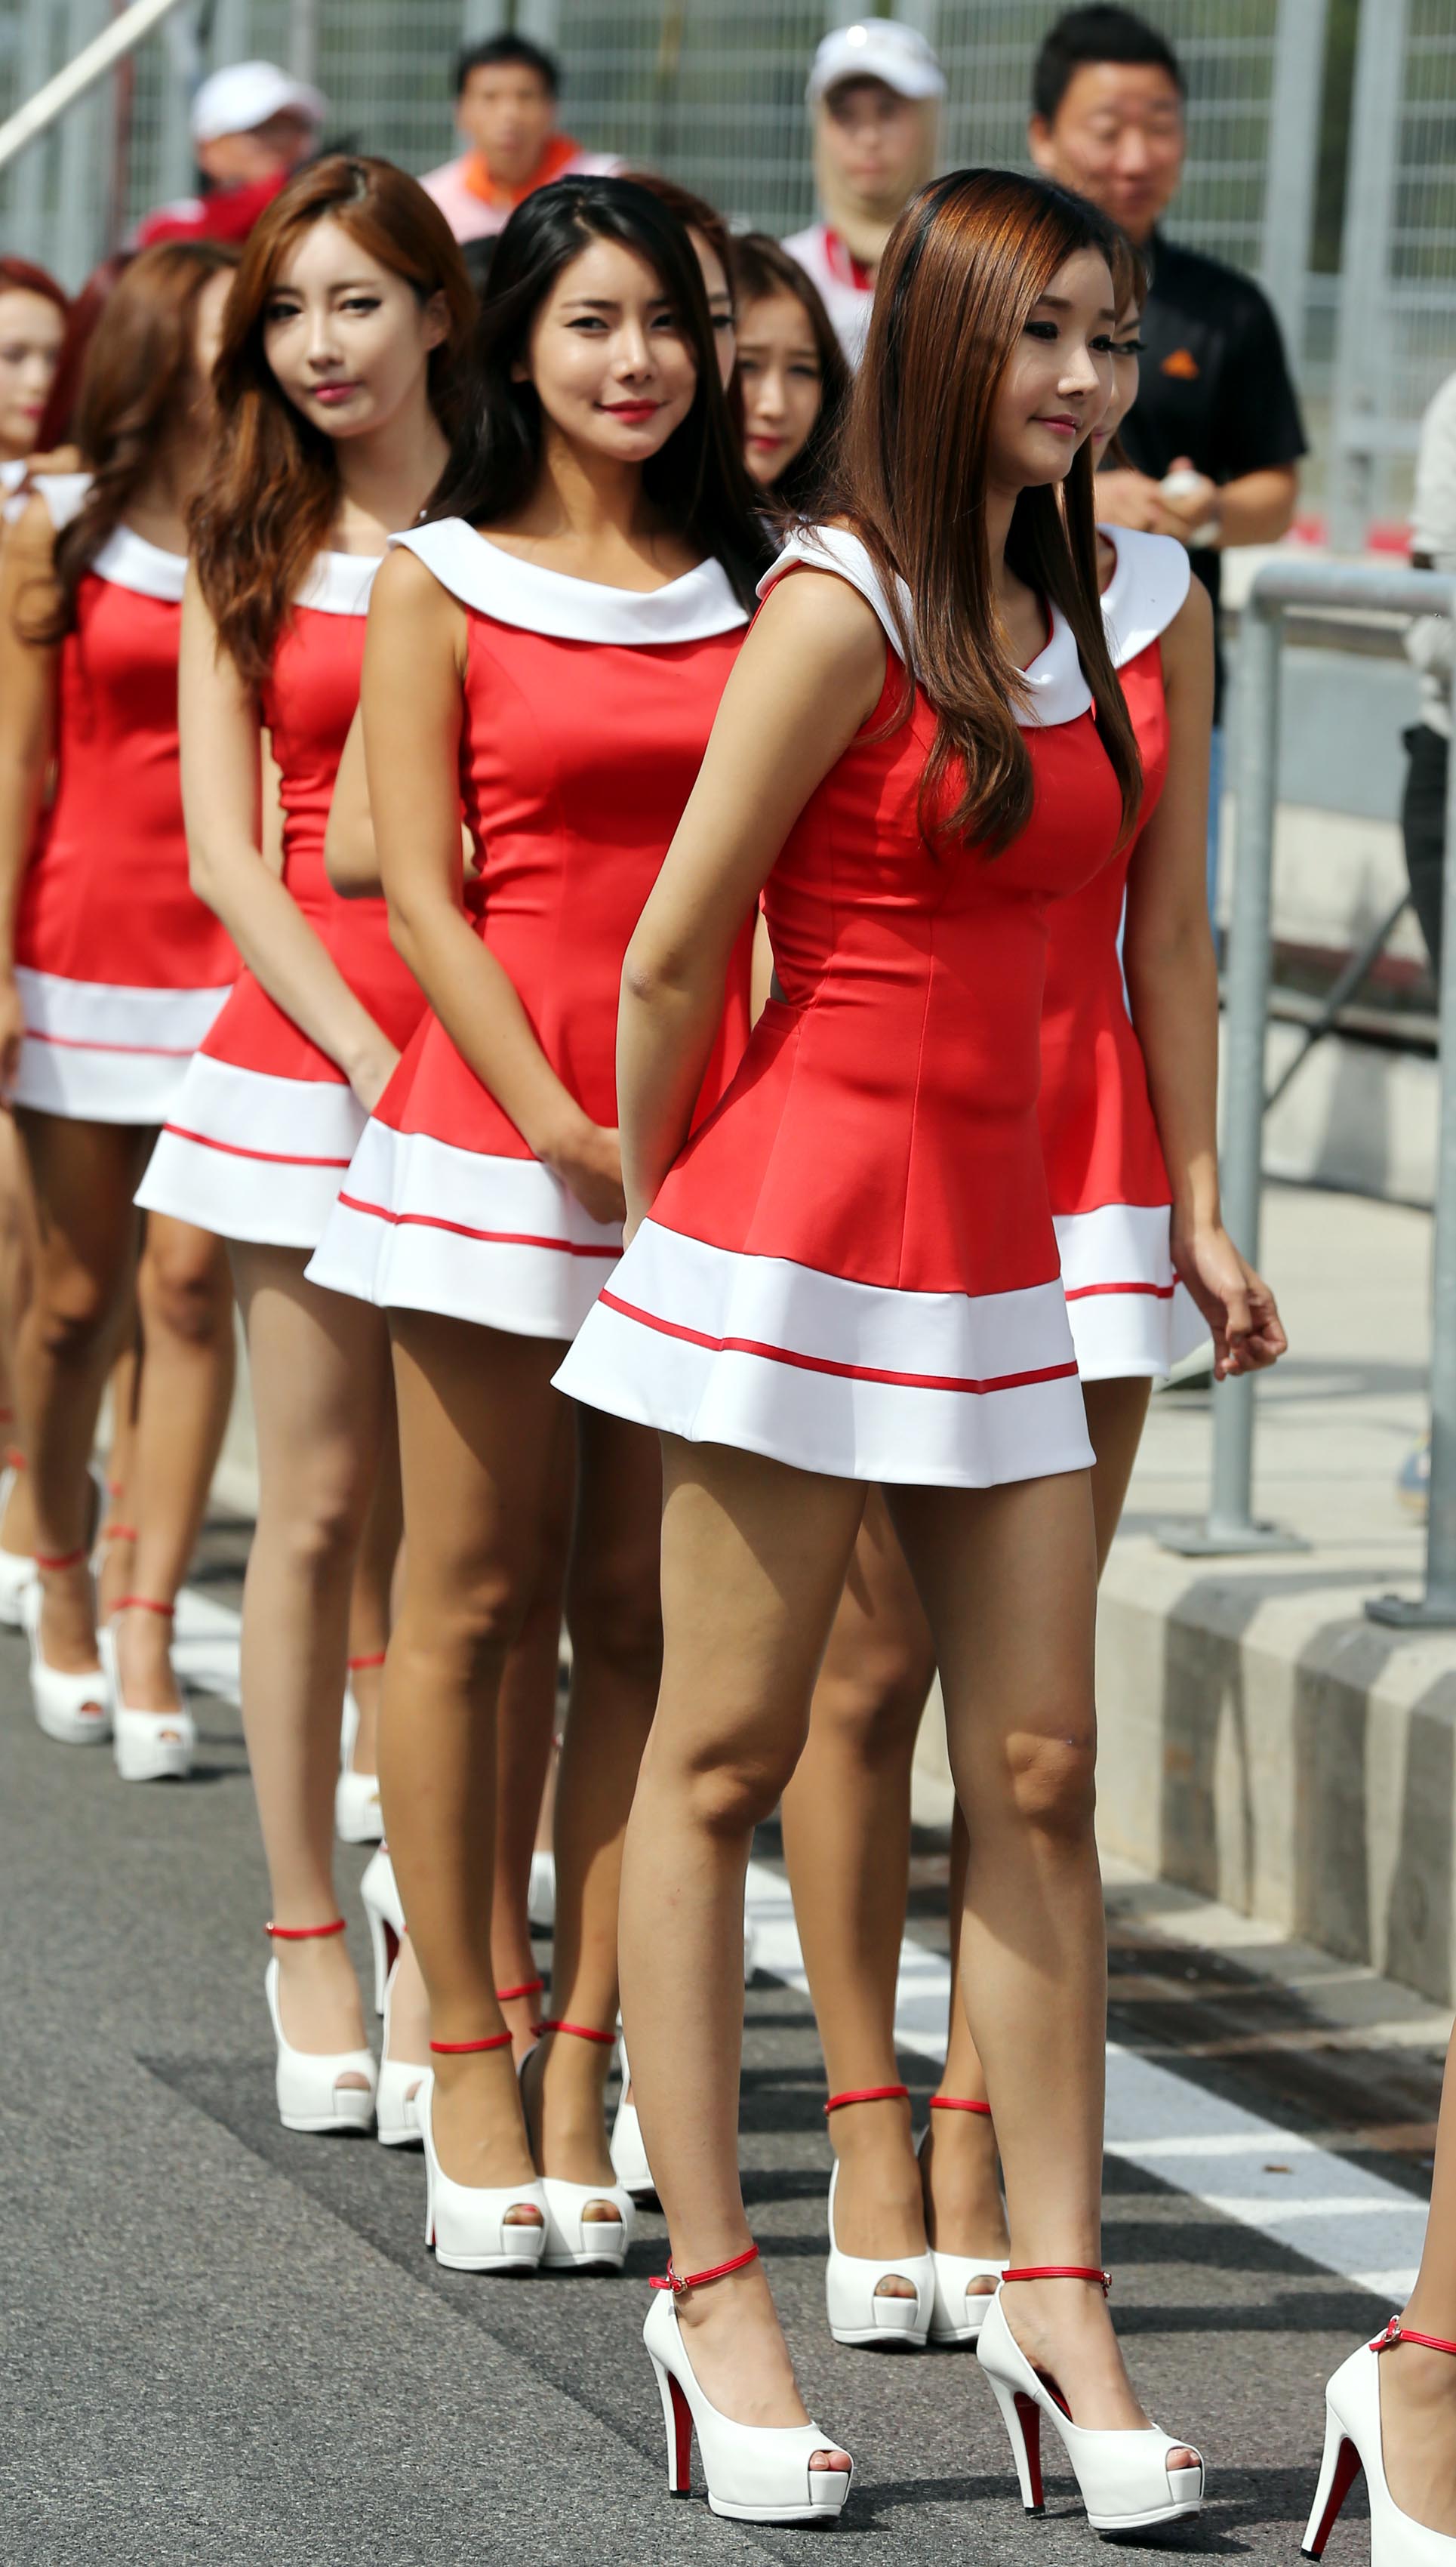 Escort girls North Korea